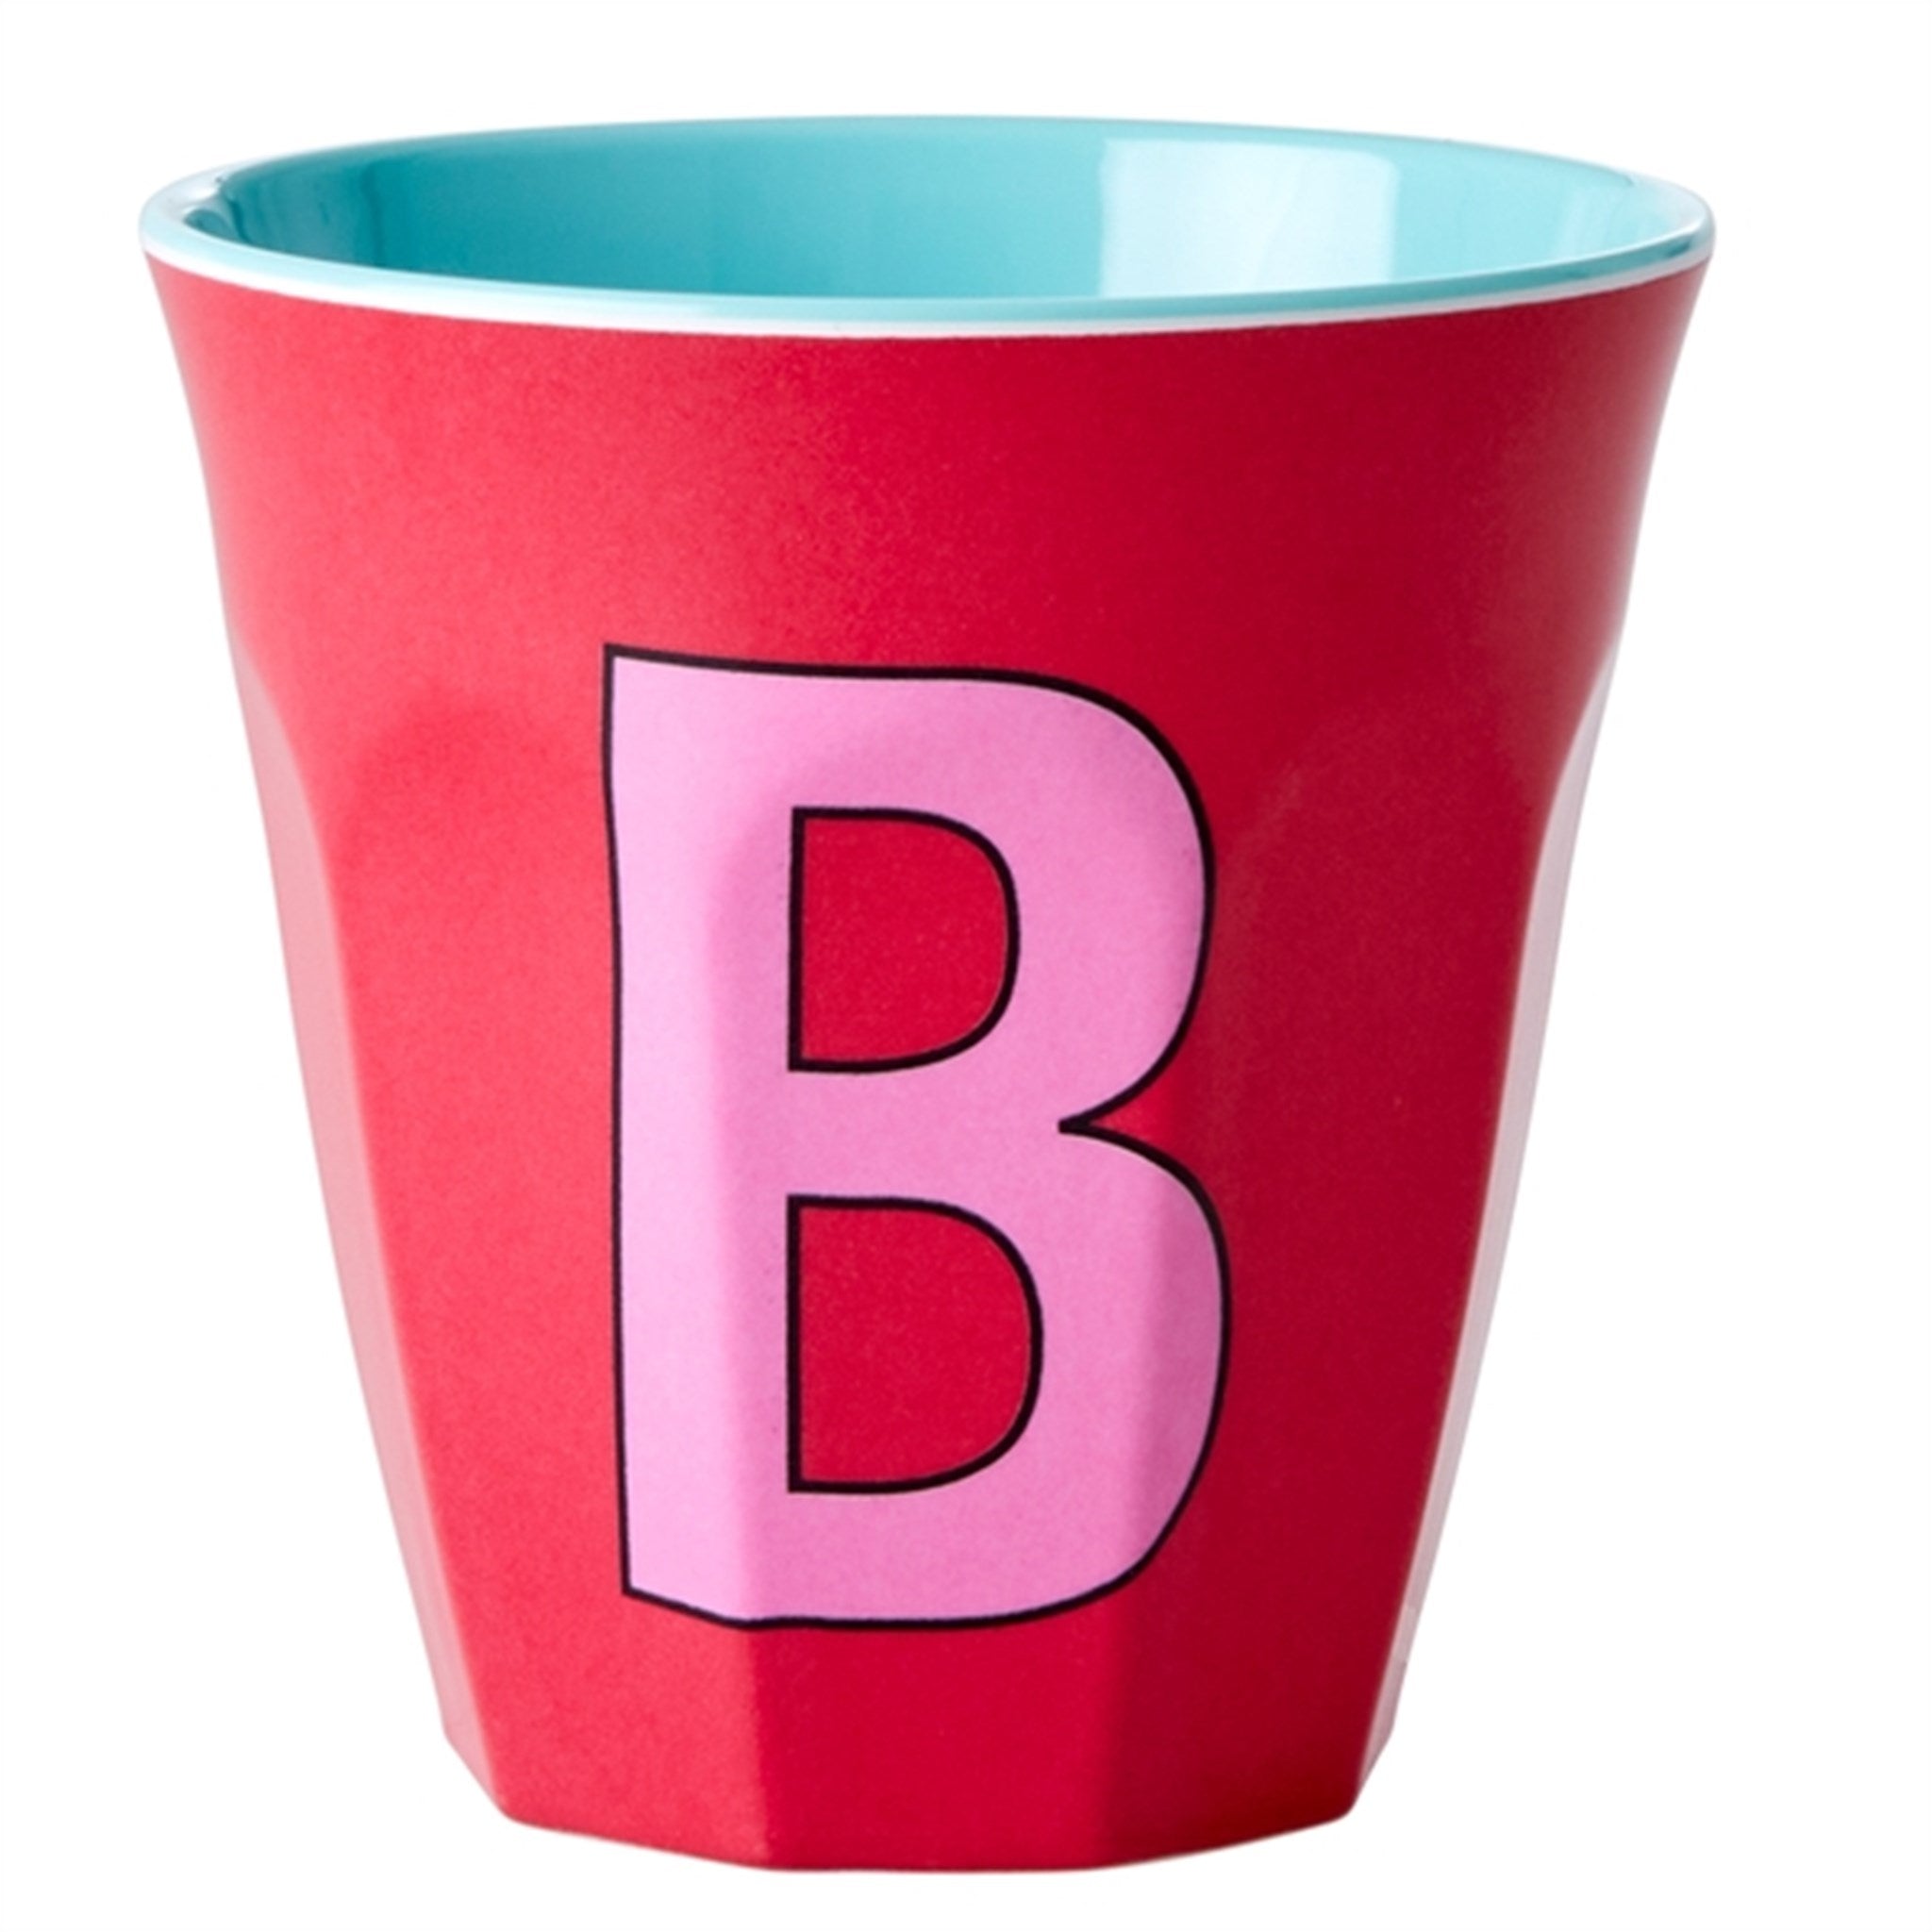 RICE Pinkish Colors Melamine Alphabet Cup 2